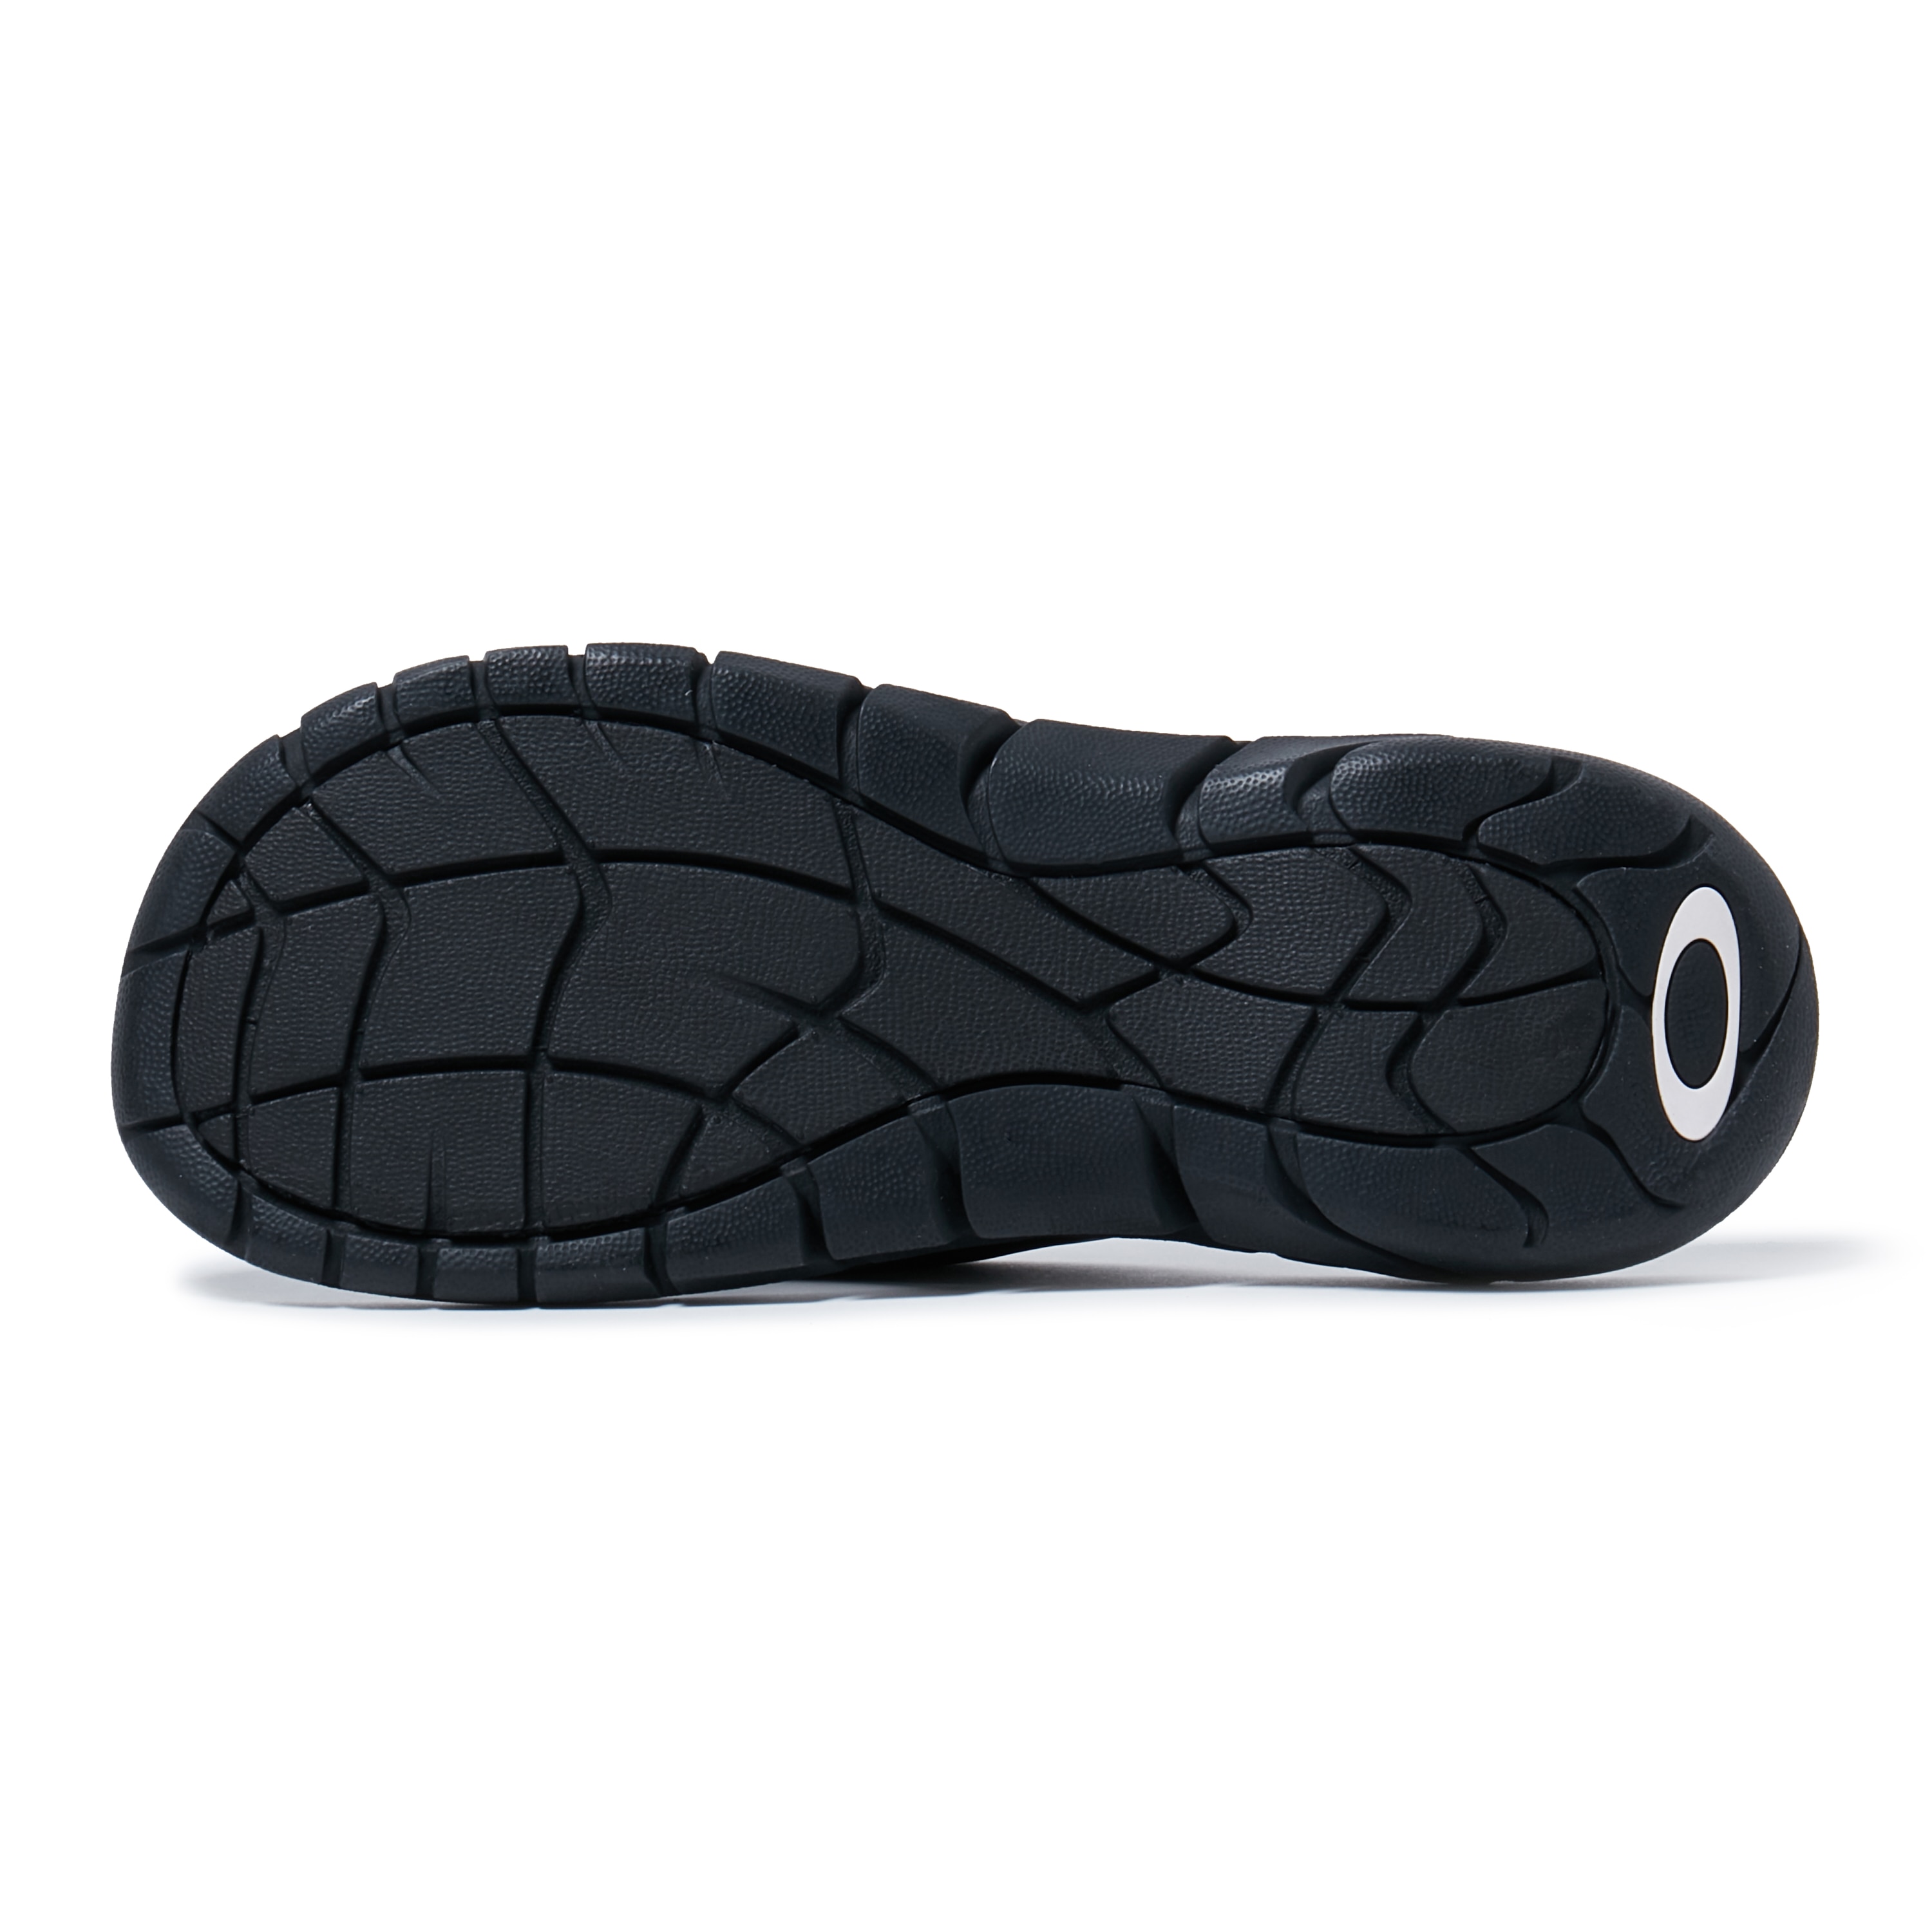 oakley supercoil 2.0 sandals